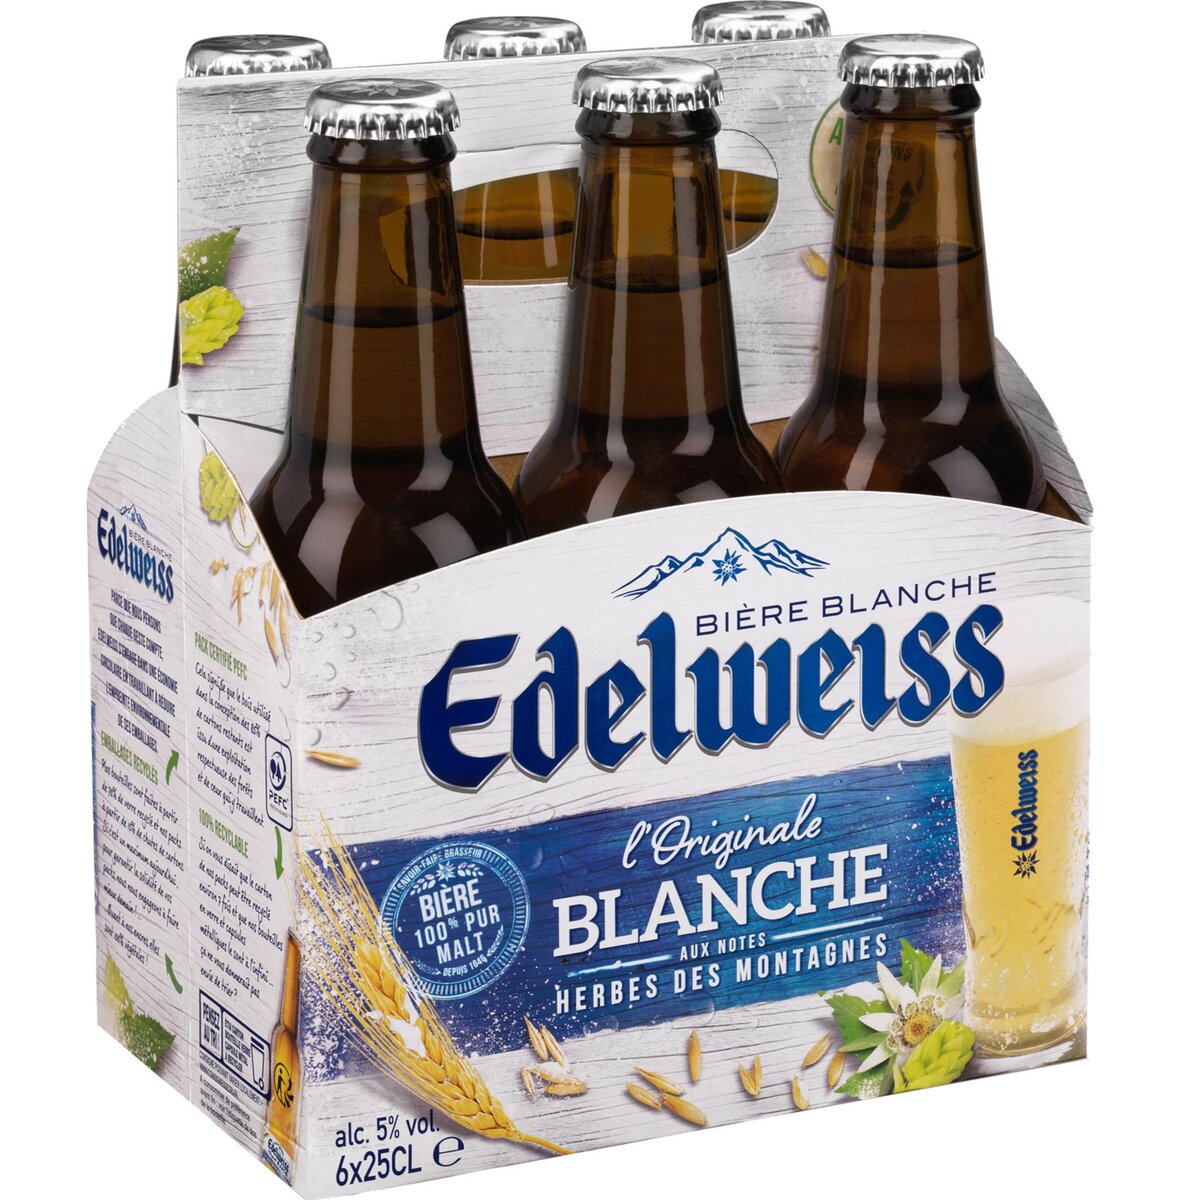 EDELWEISS Edelweiss Bière blanche arôme herbes des montagnes 5% bouteille 6x25cl 6x25cl